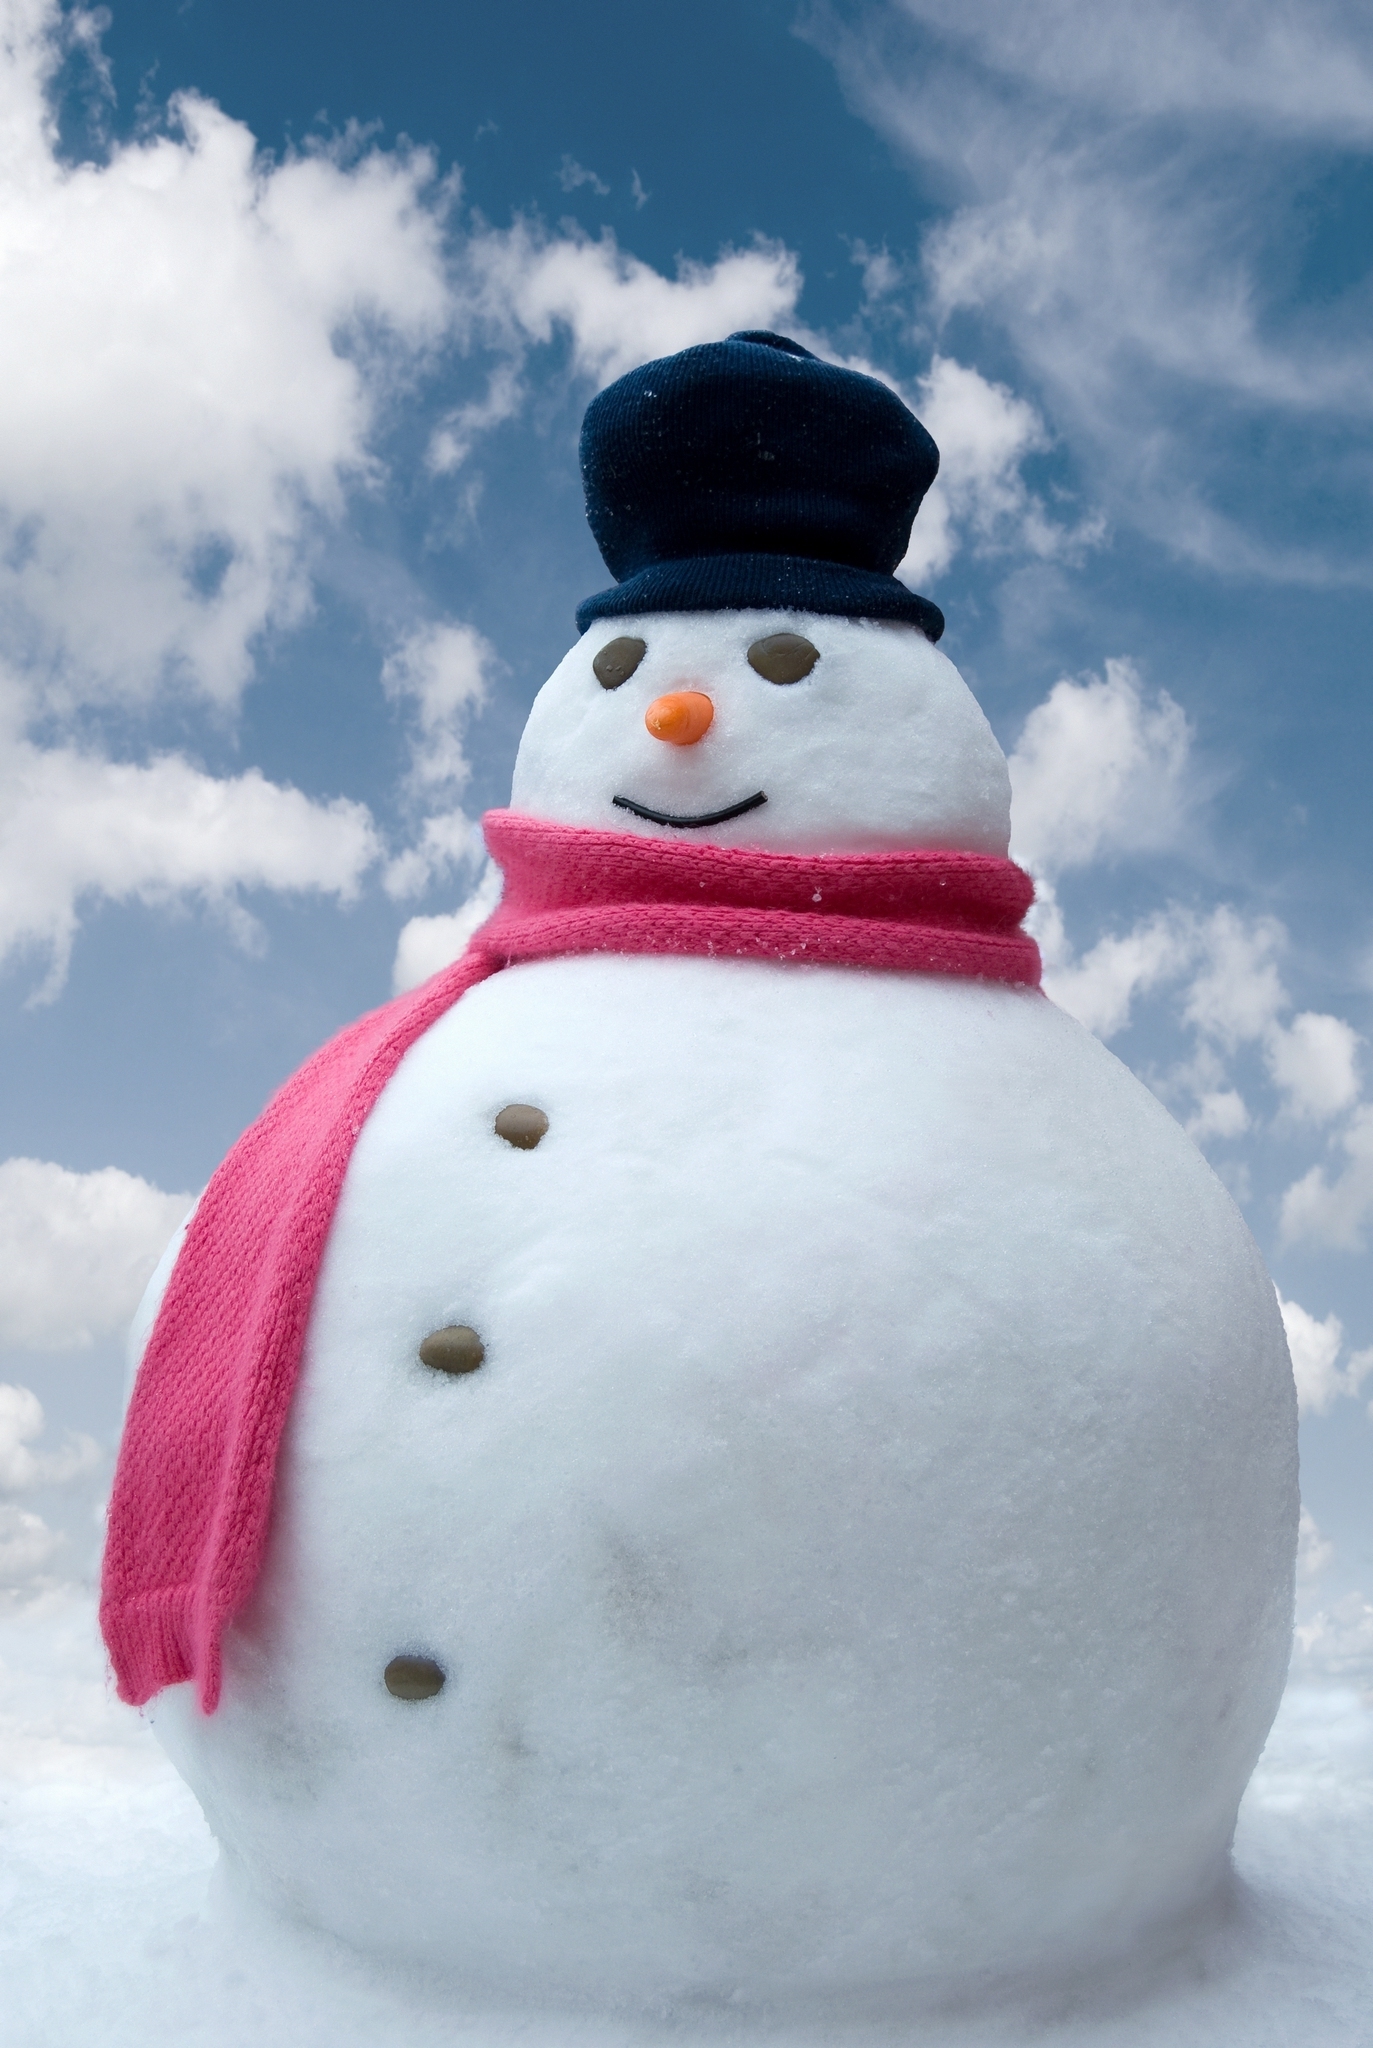 Snowman - Christmas Photo (22227886) - Fanpop